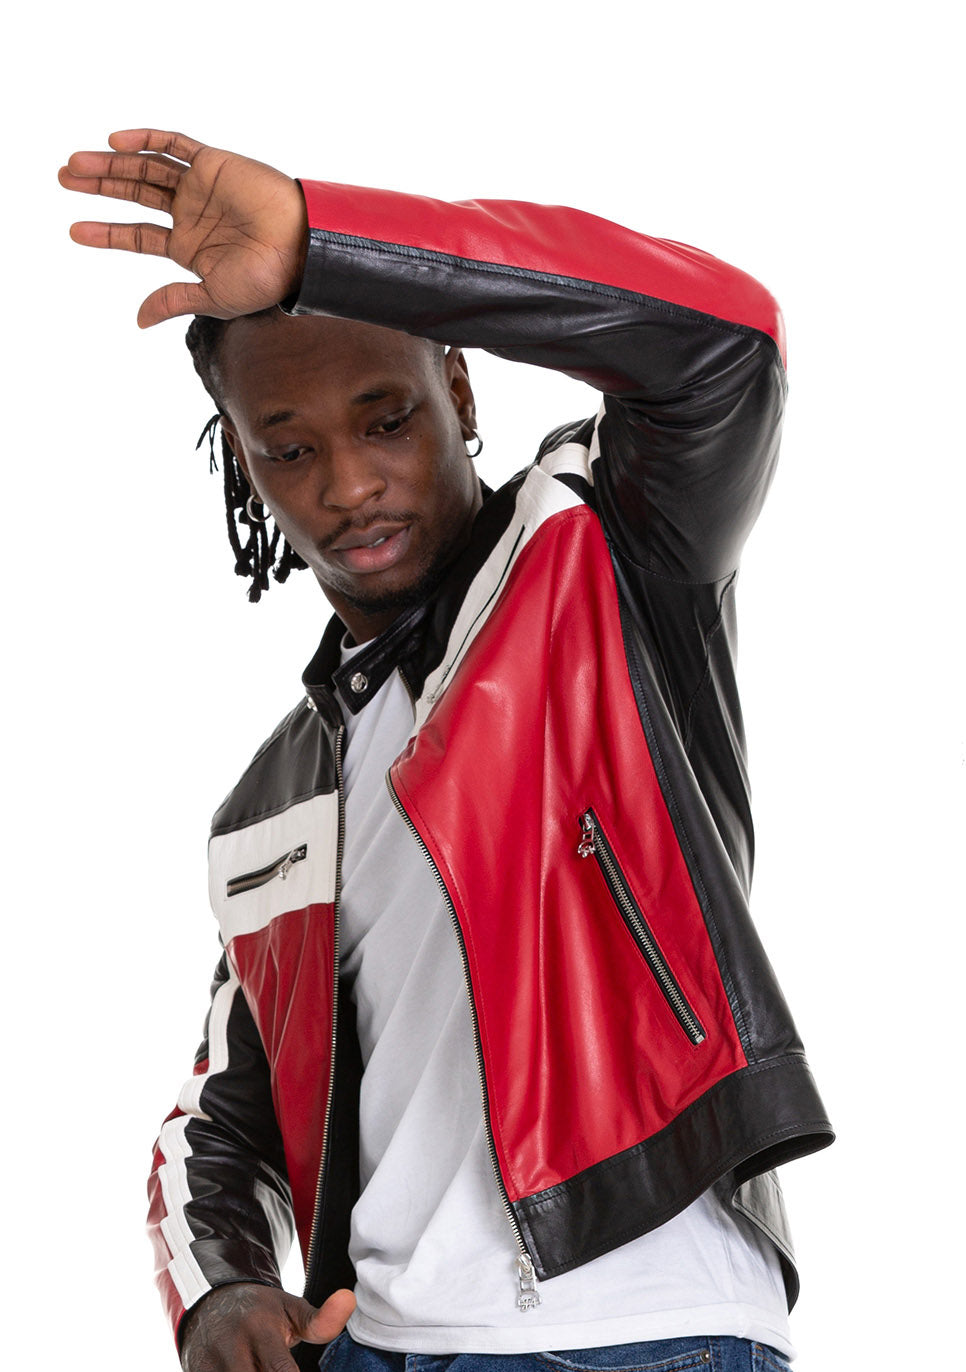 Rockstar Street Fashion Red Leather Jacket for Men